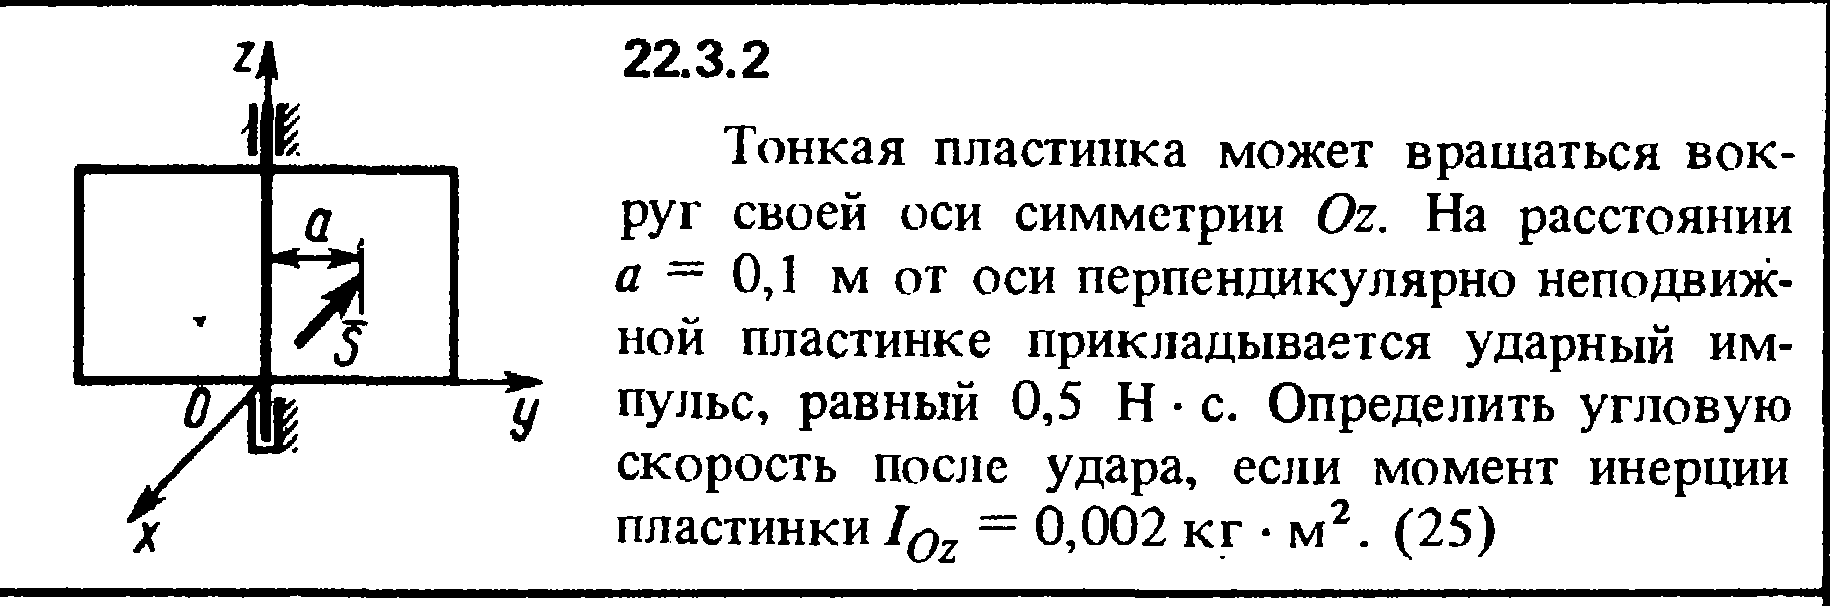 Решение 22.3.2 из сборника (решебника) Кепе О.Е. 1989